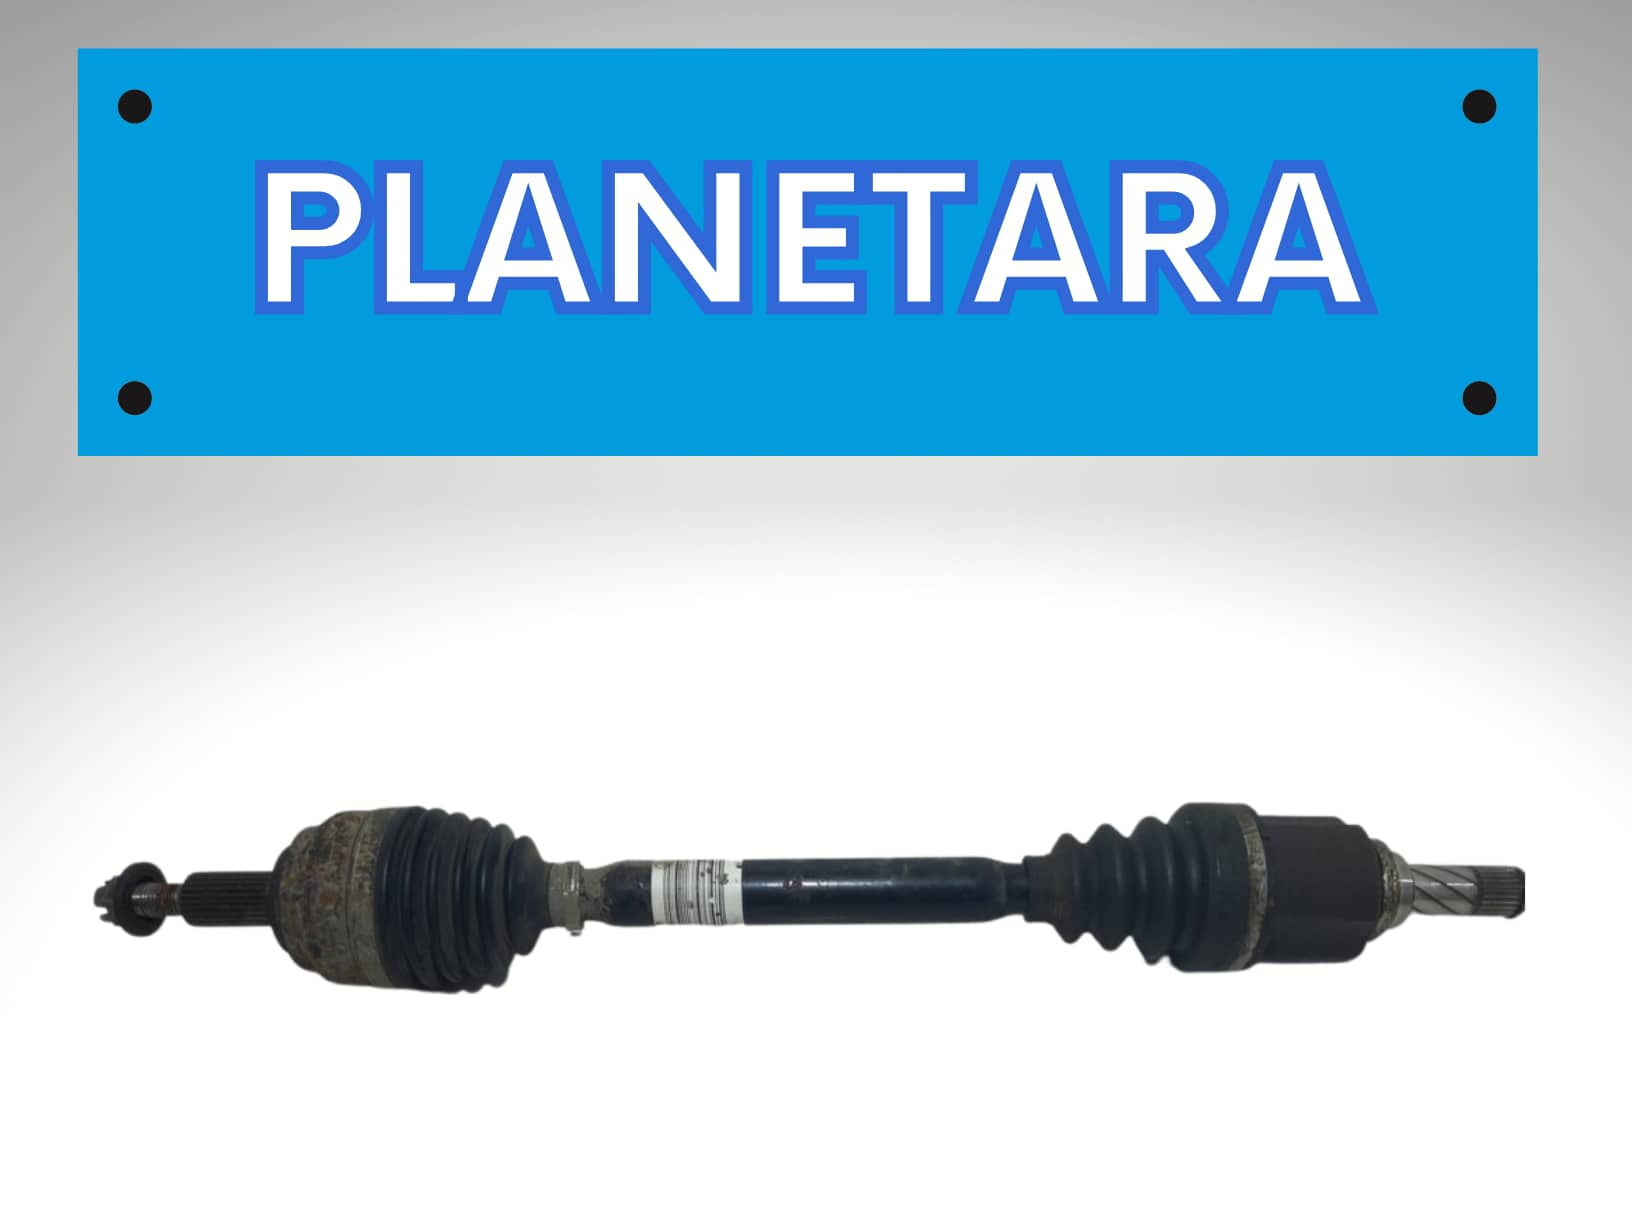 Planetara